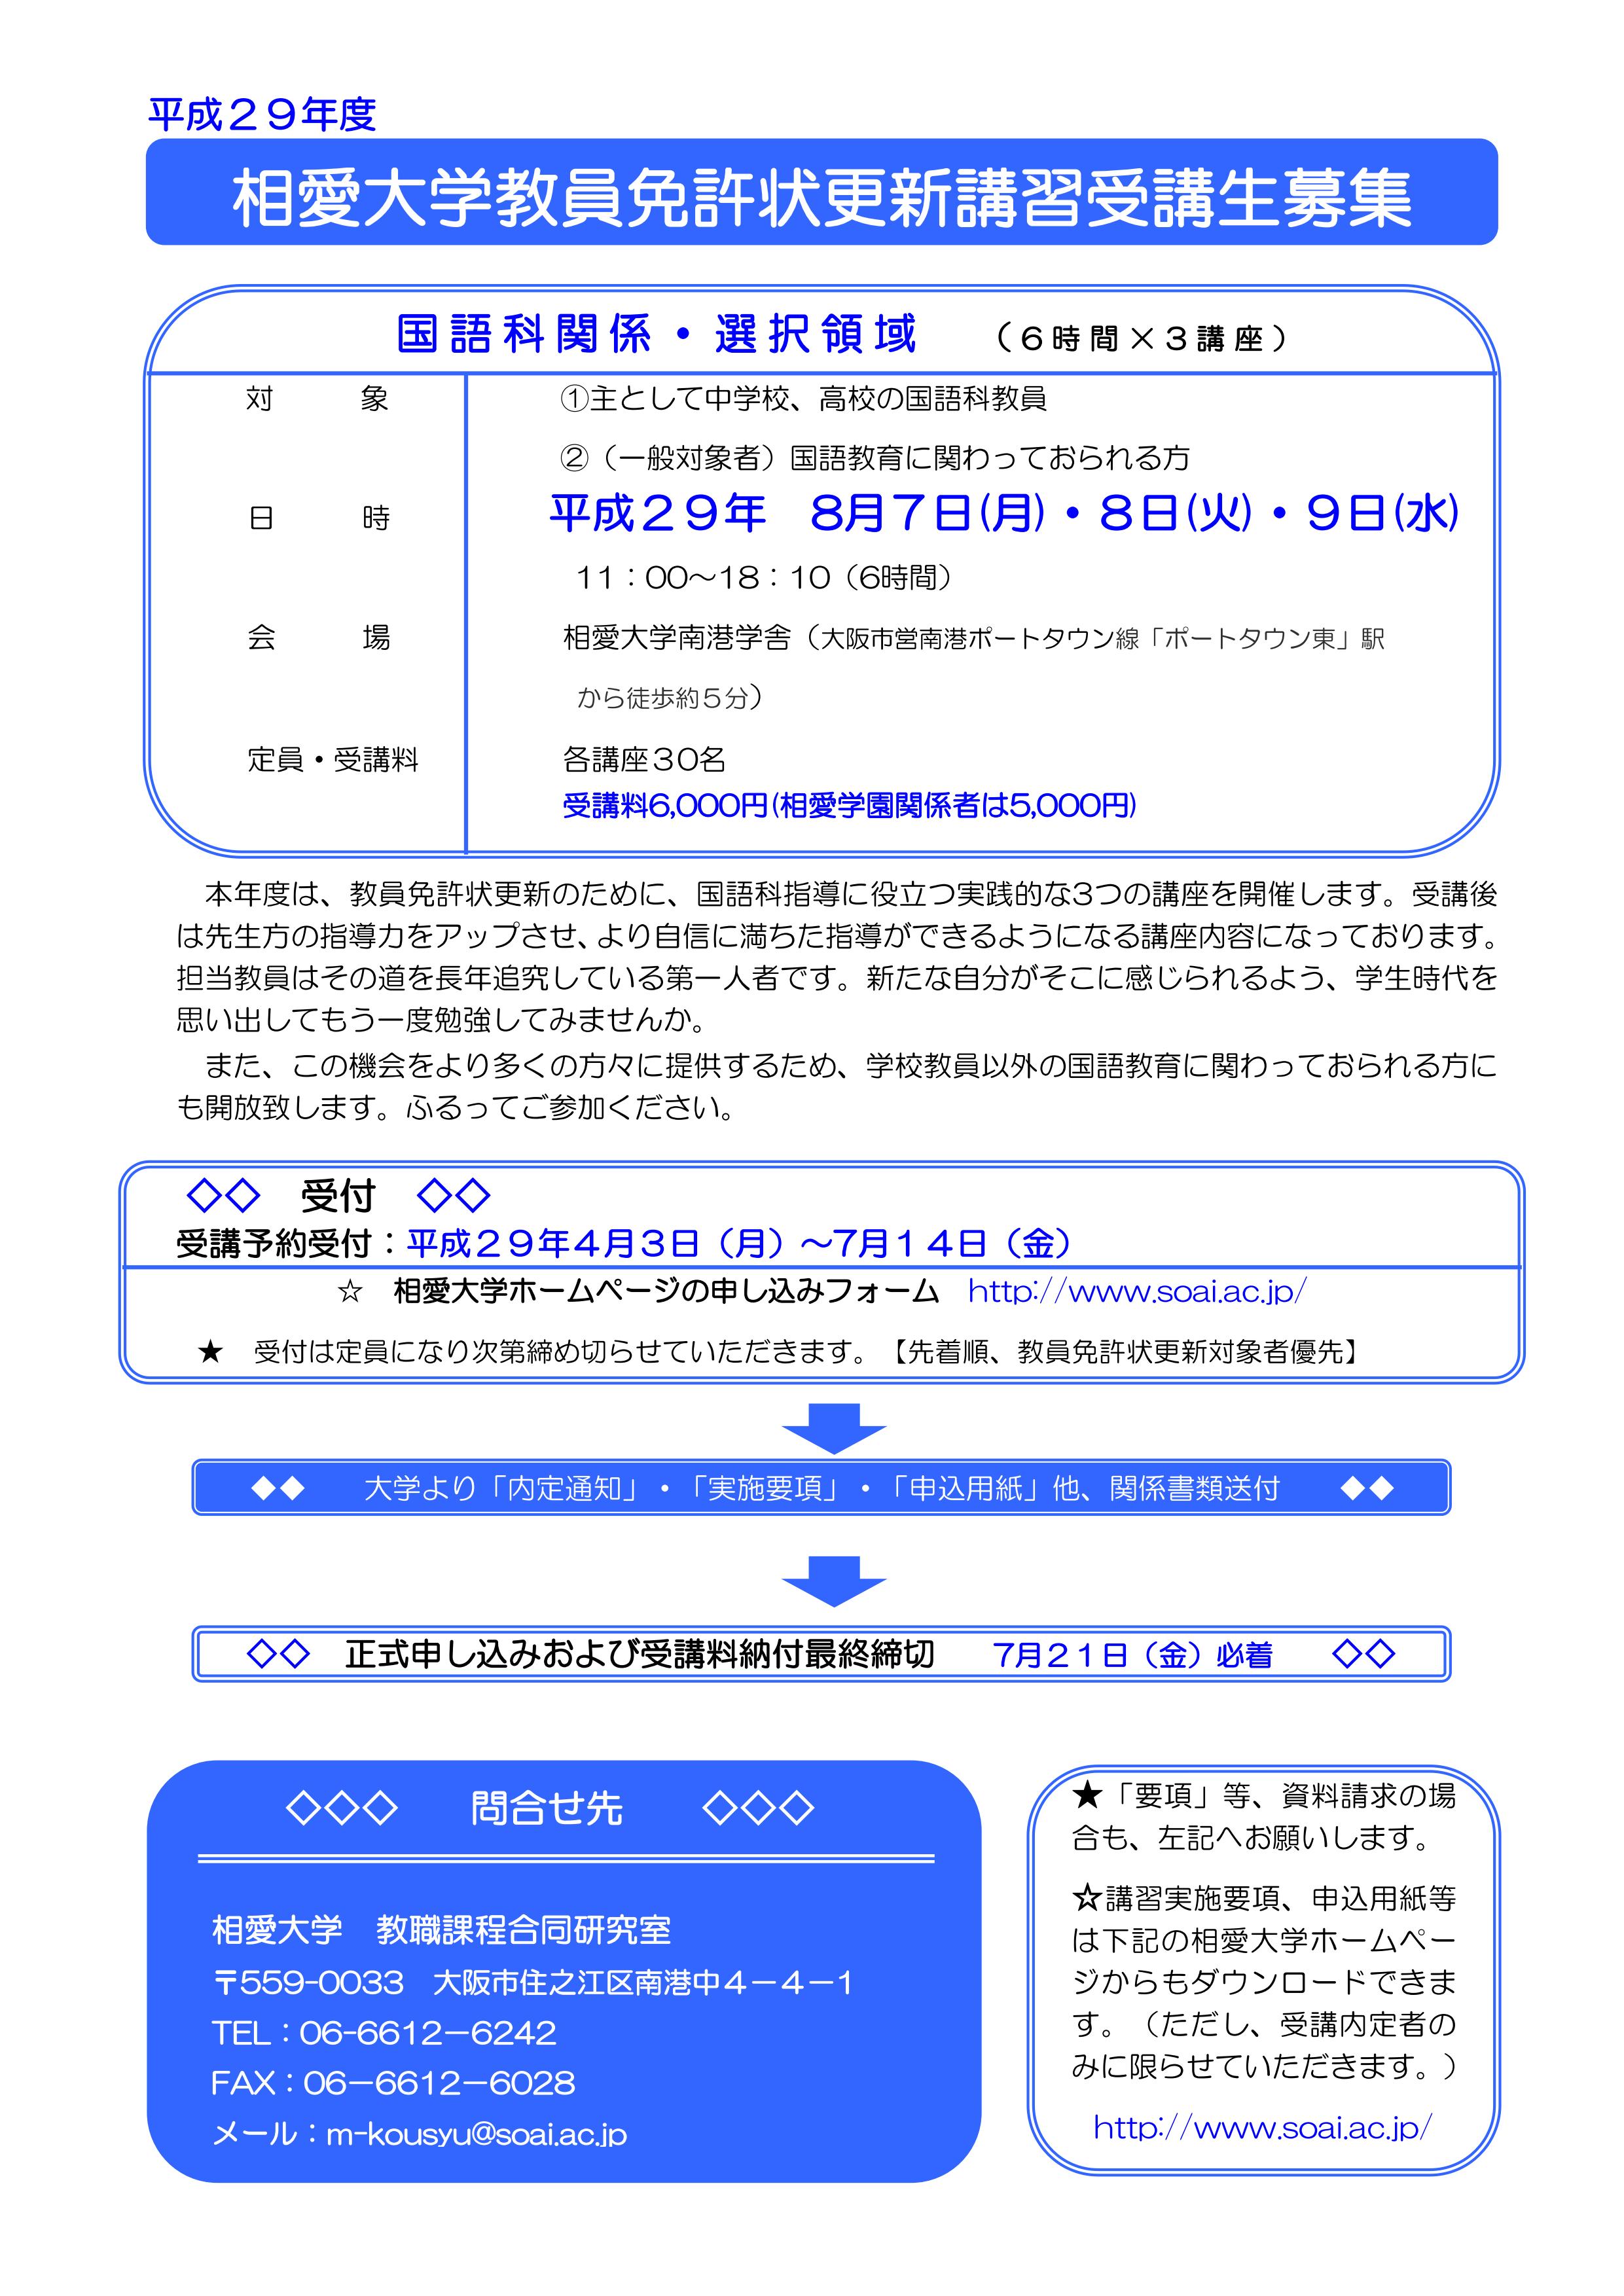 http://www.soai.ac.jp/information/lecture/kyoumen-koushu_2017_01.jpg